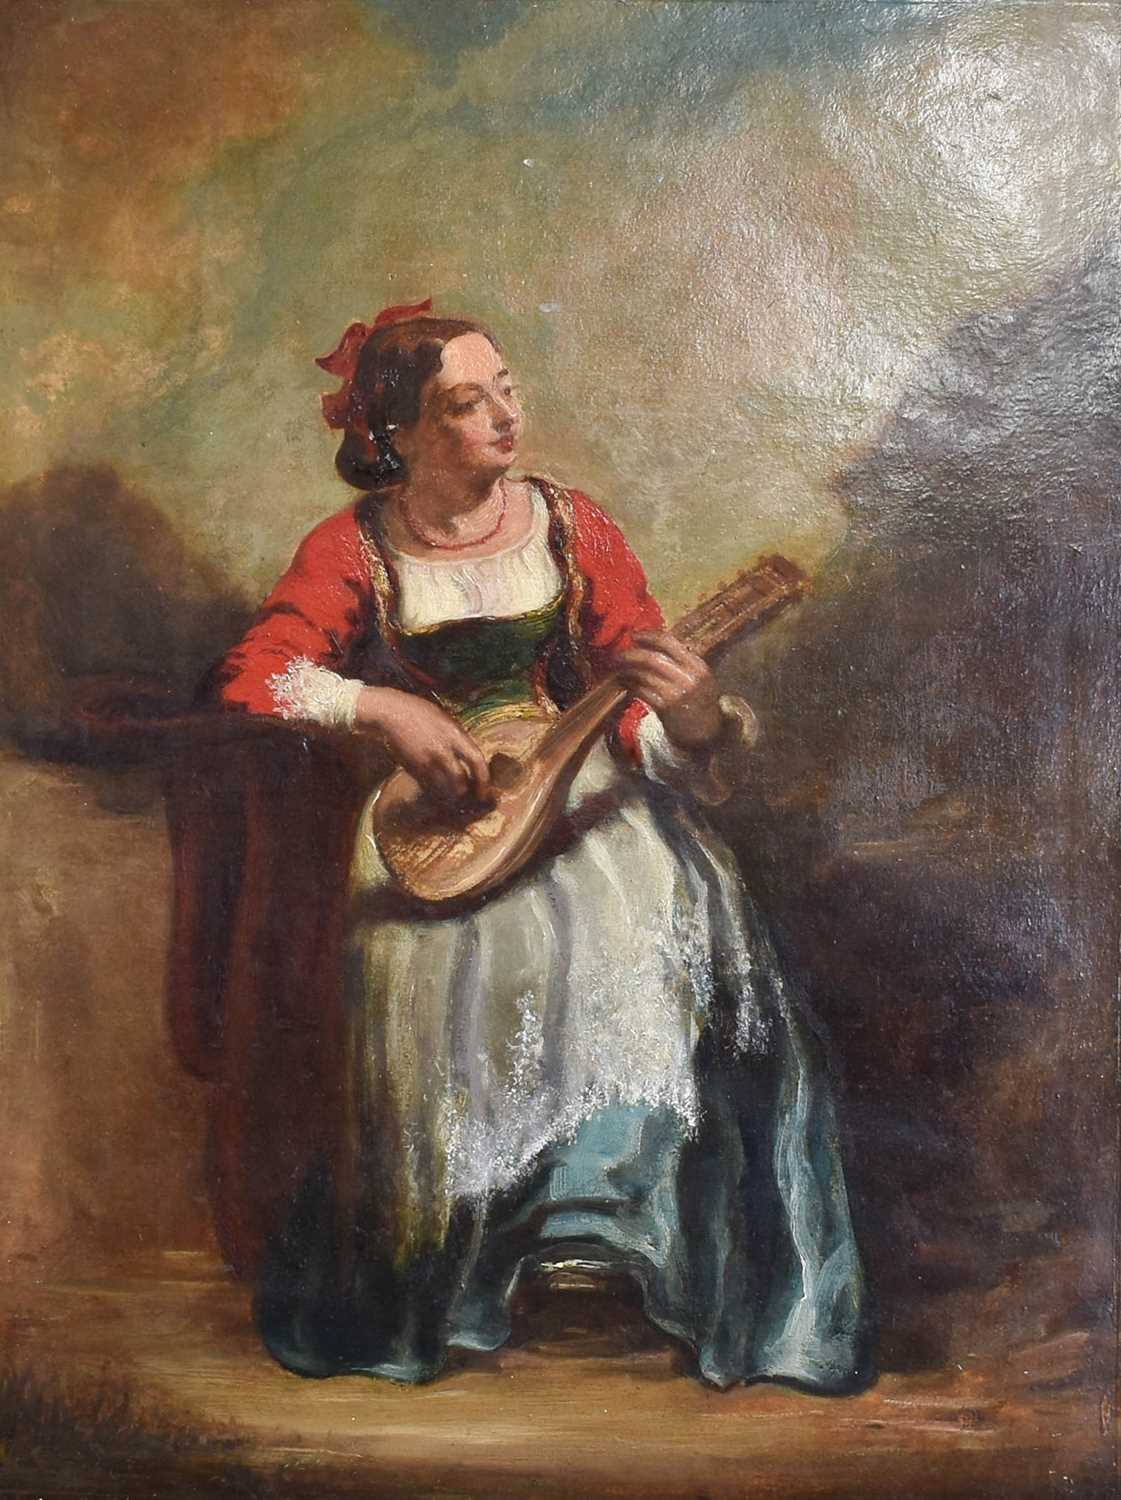 Continental School (19th Century) Serenade on the mandolin Oil on canvas, 60cm by 45cm